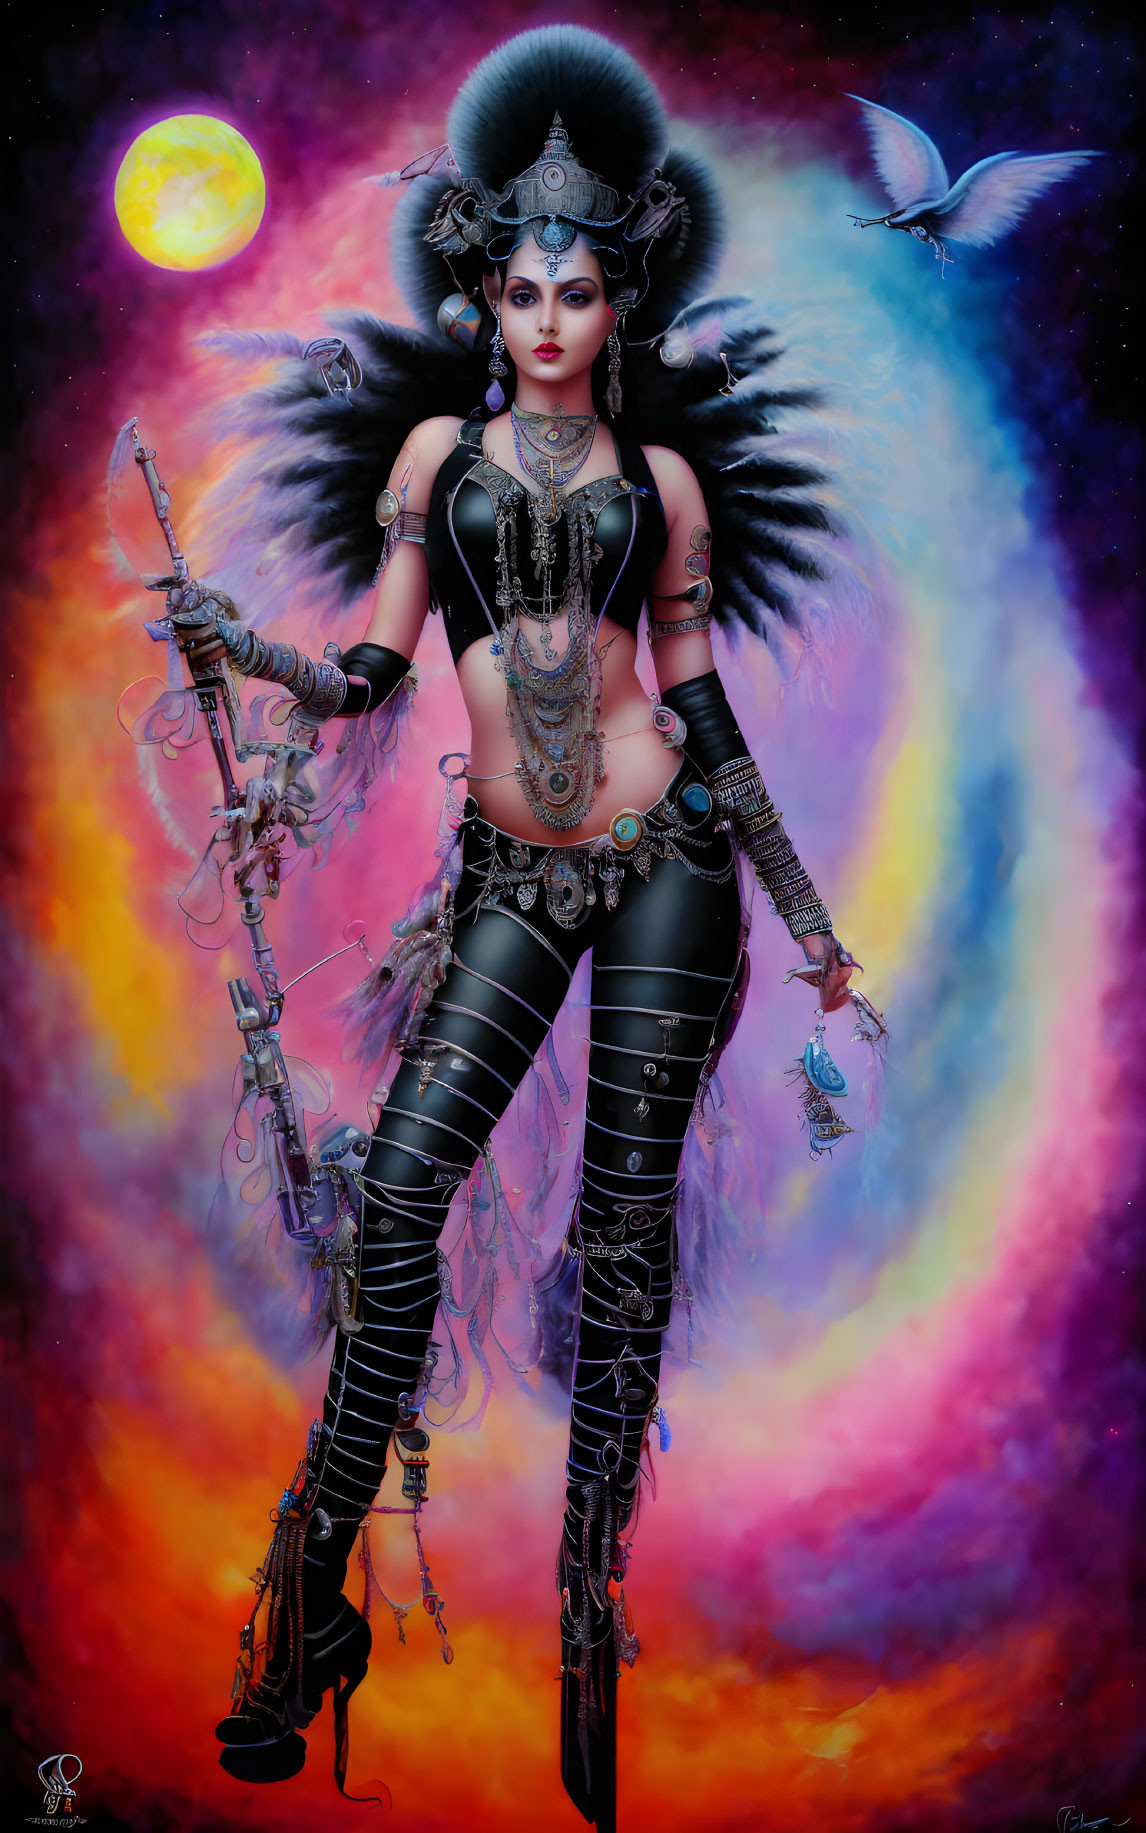 Fantasy-inspired female figure in dark attire against vibrant nebula background